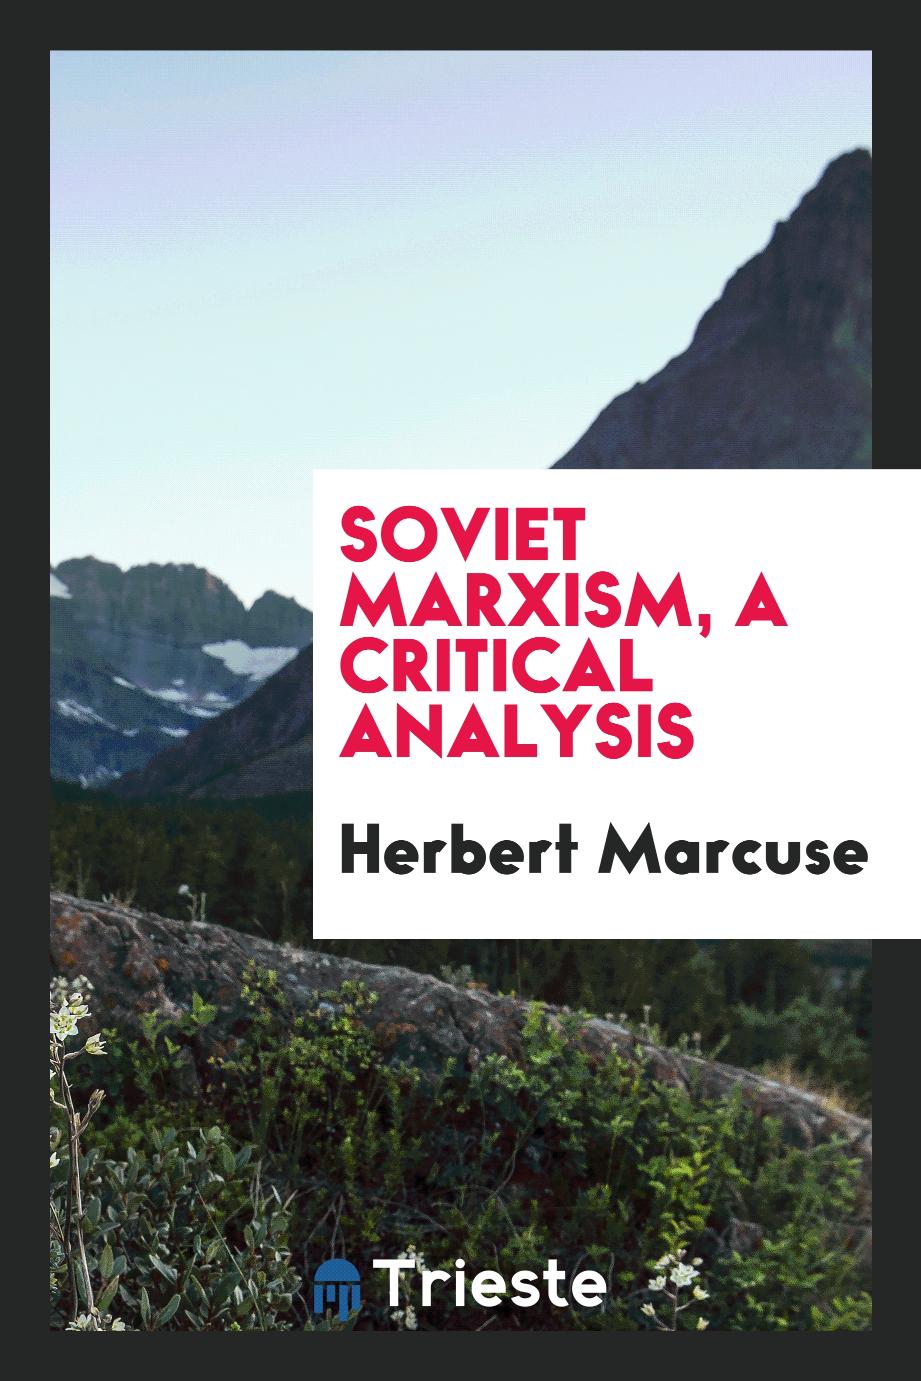 Soviet Marxism, a critical analysis